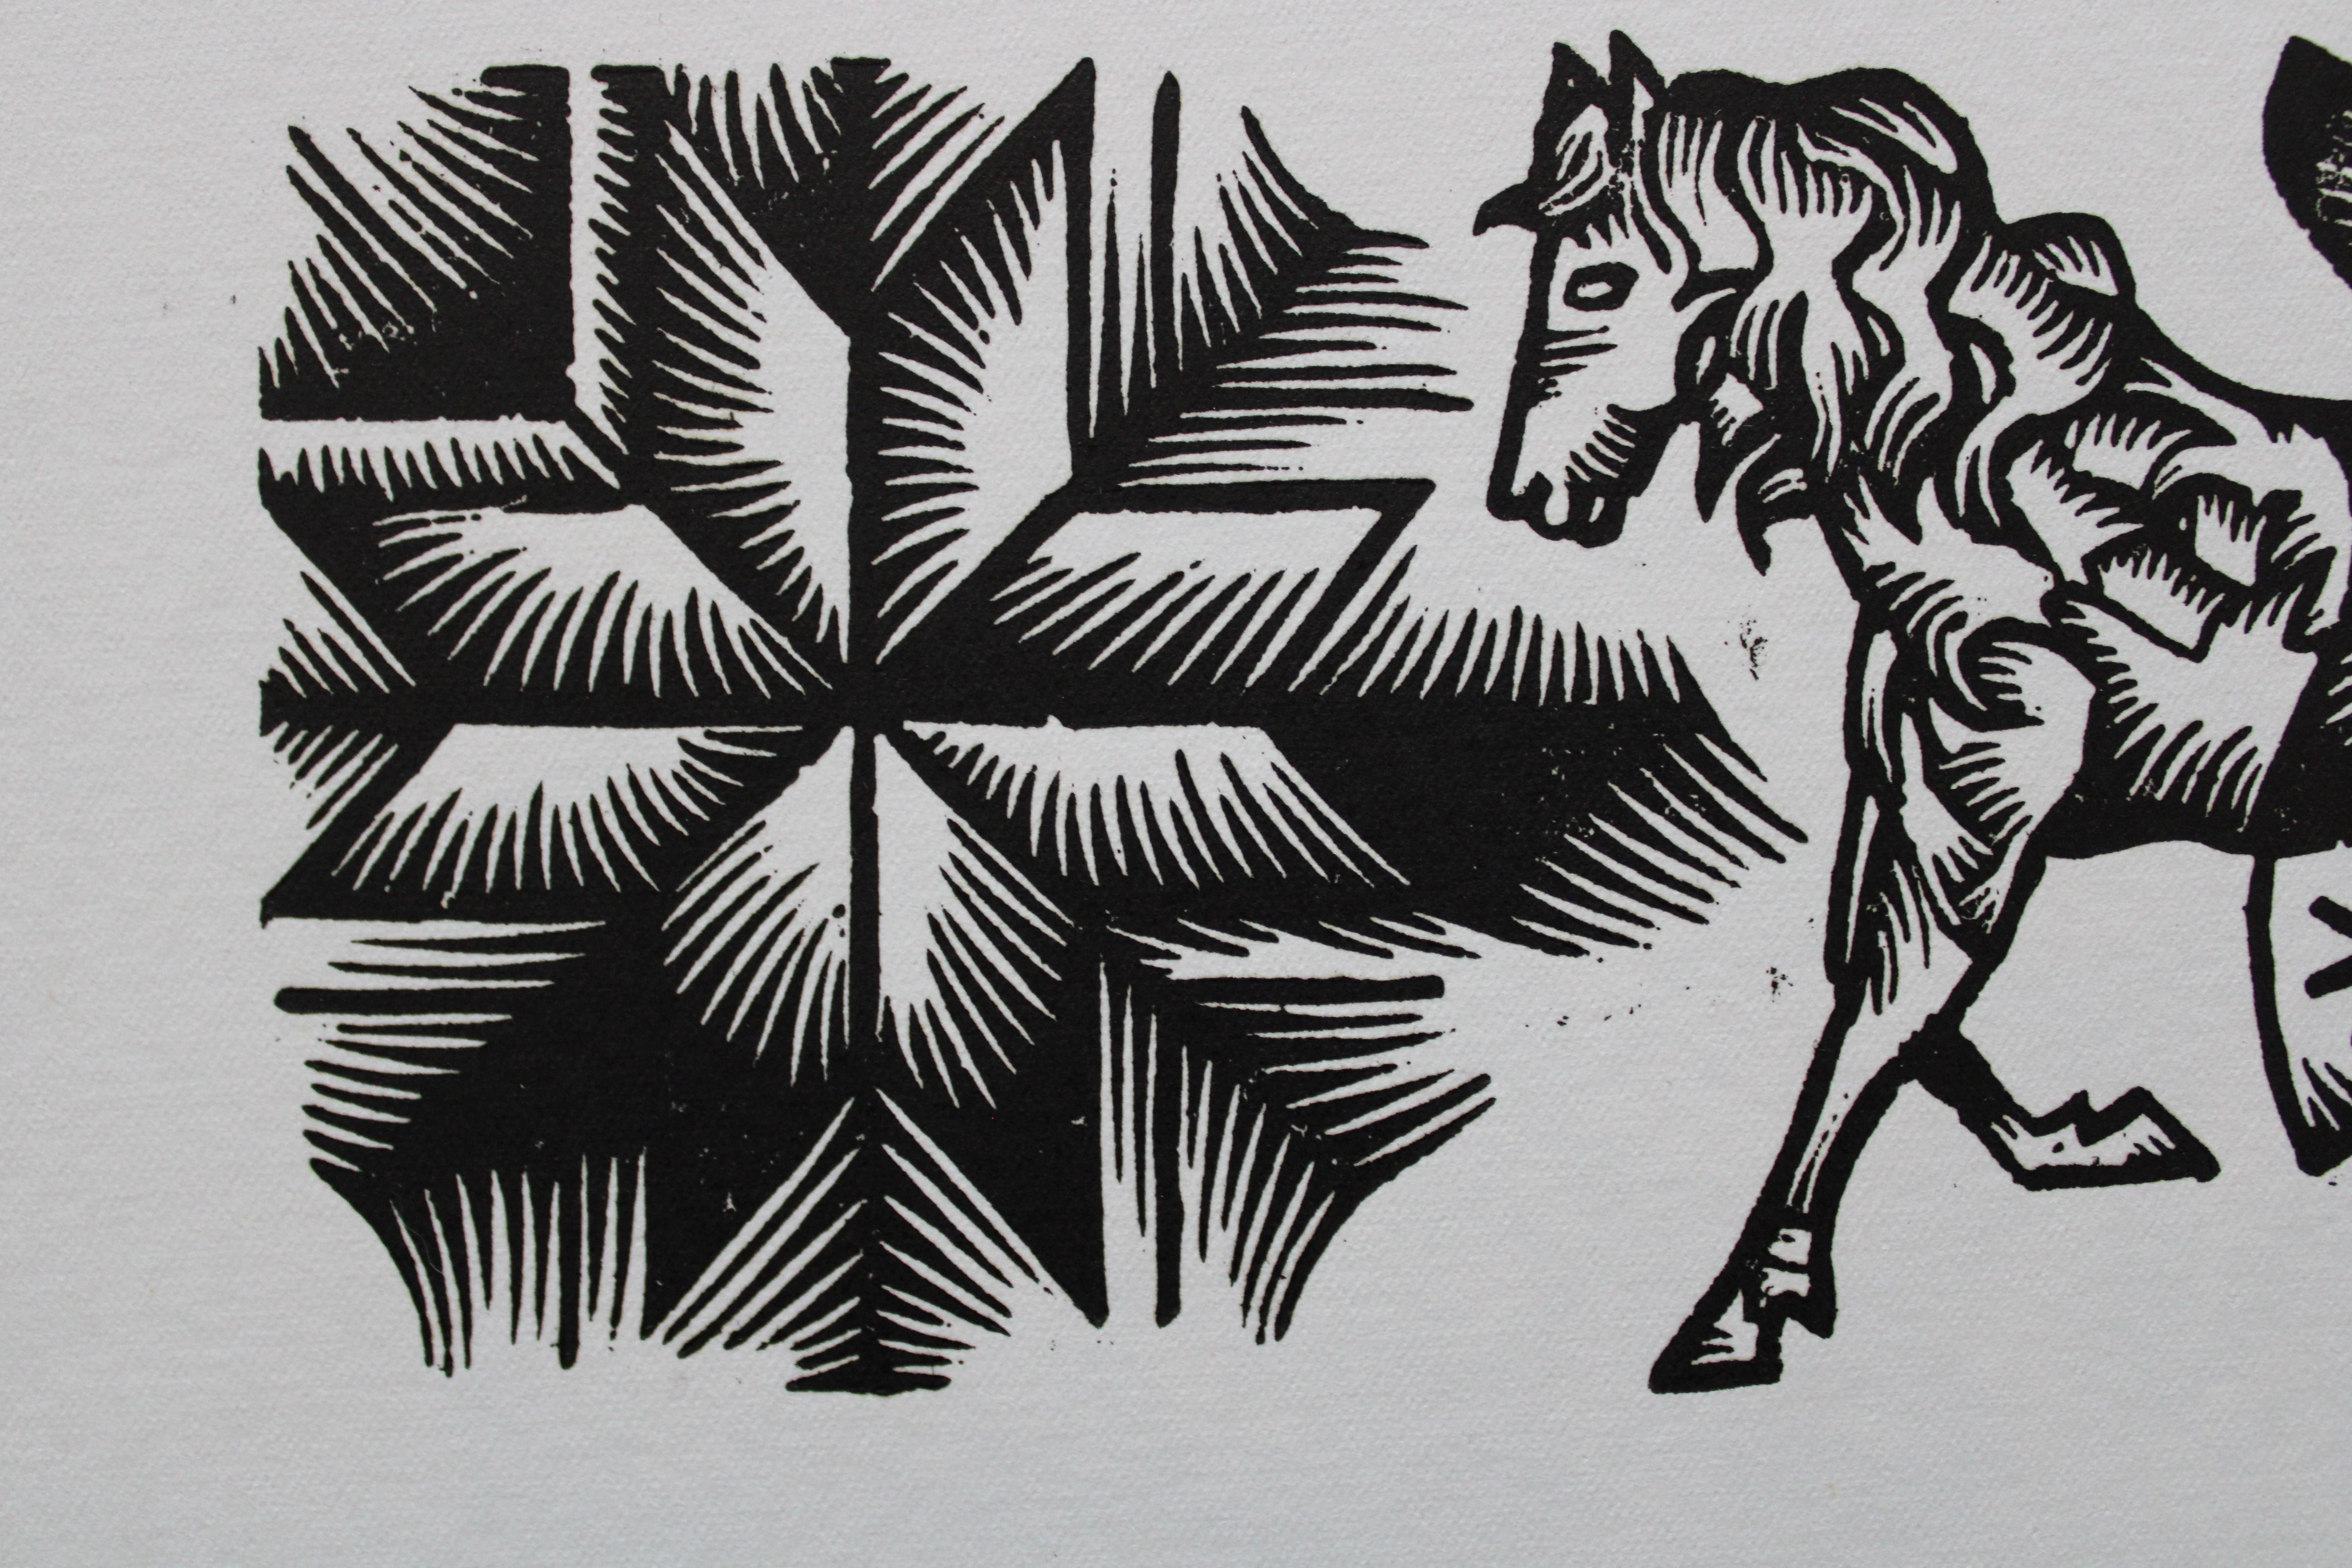 Foal on the way. 1979. Paper, linocut, 19x33 cm - Print by Dainis Rozkalns